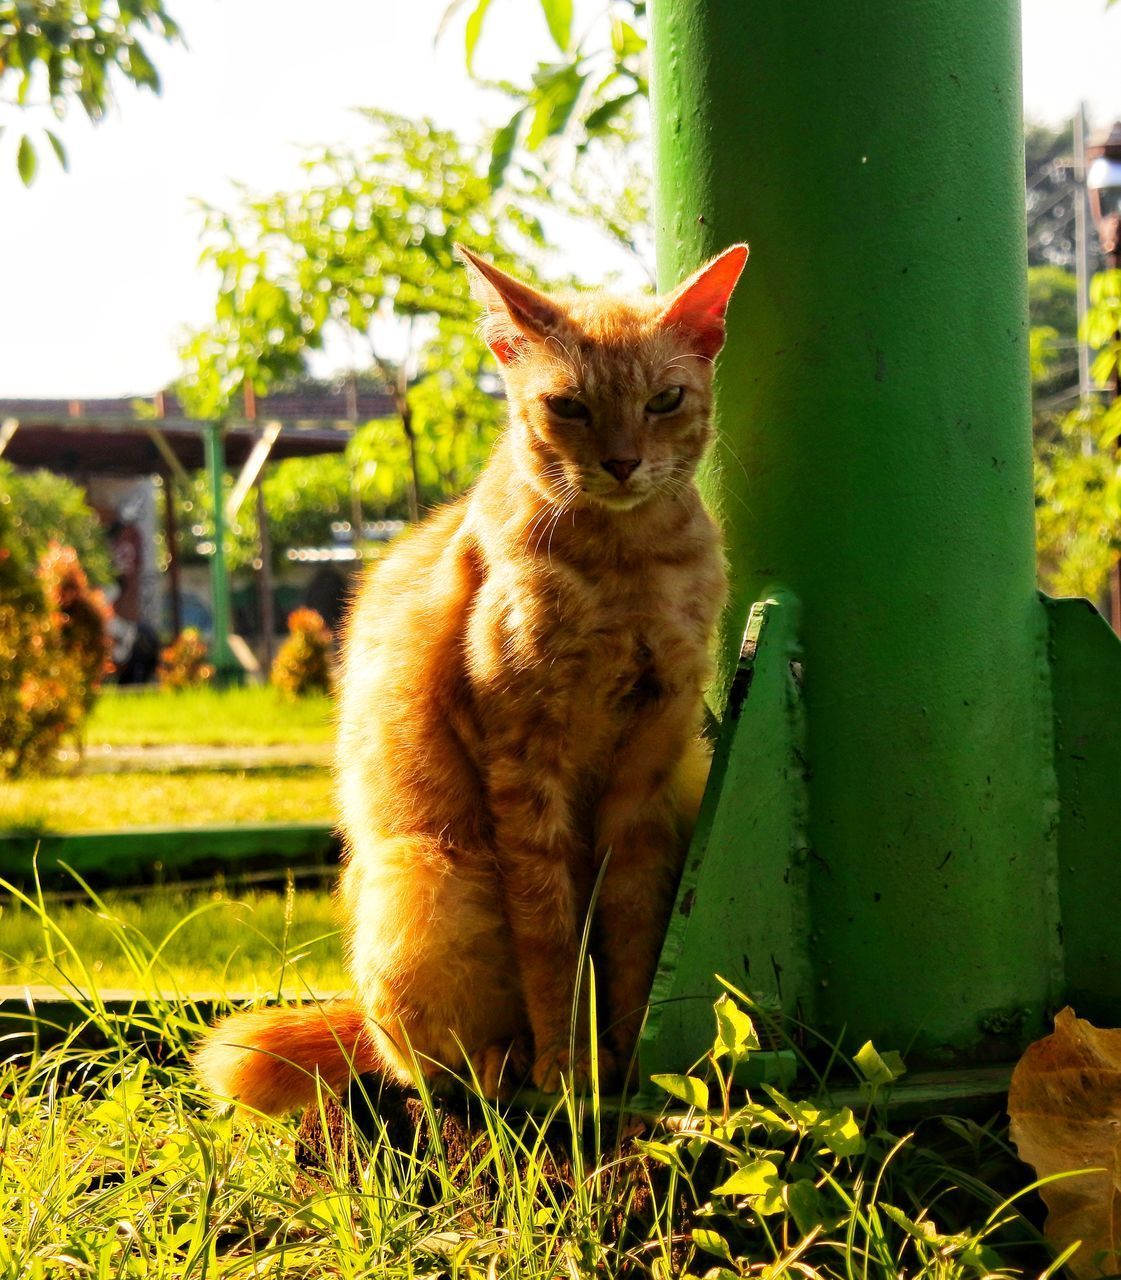 PORTRAIT OF CAT SITTING ON GRASS